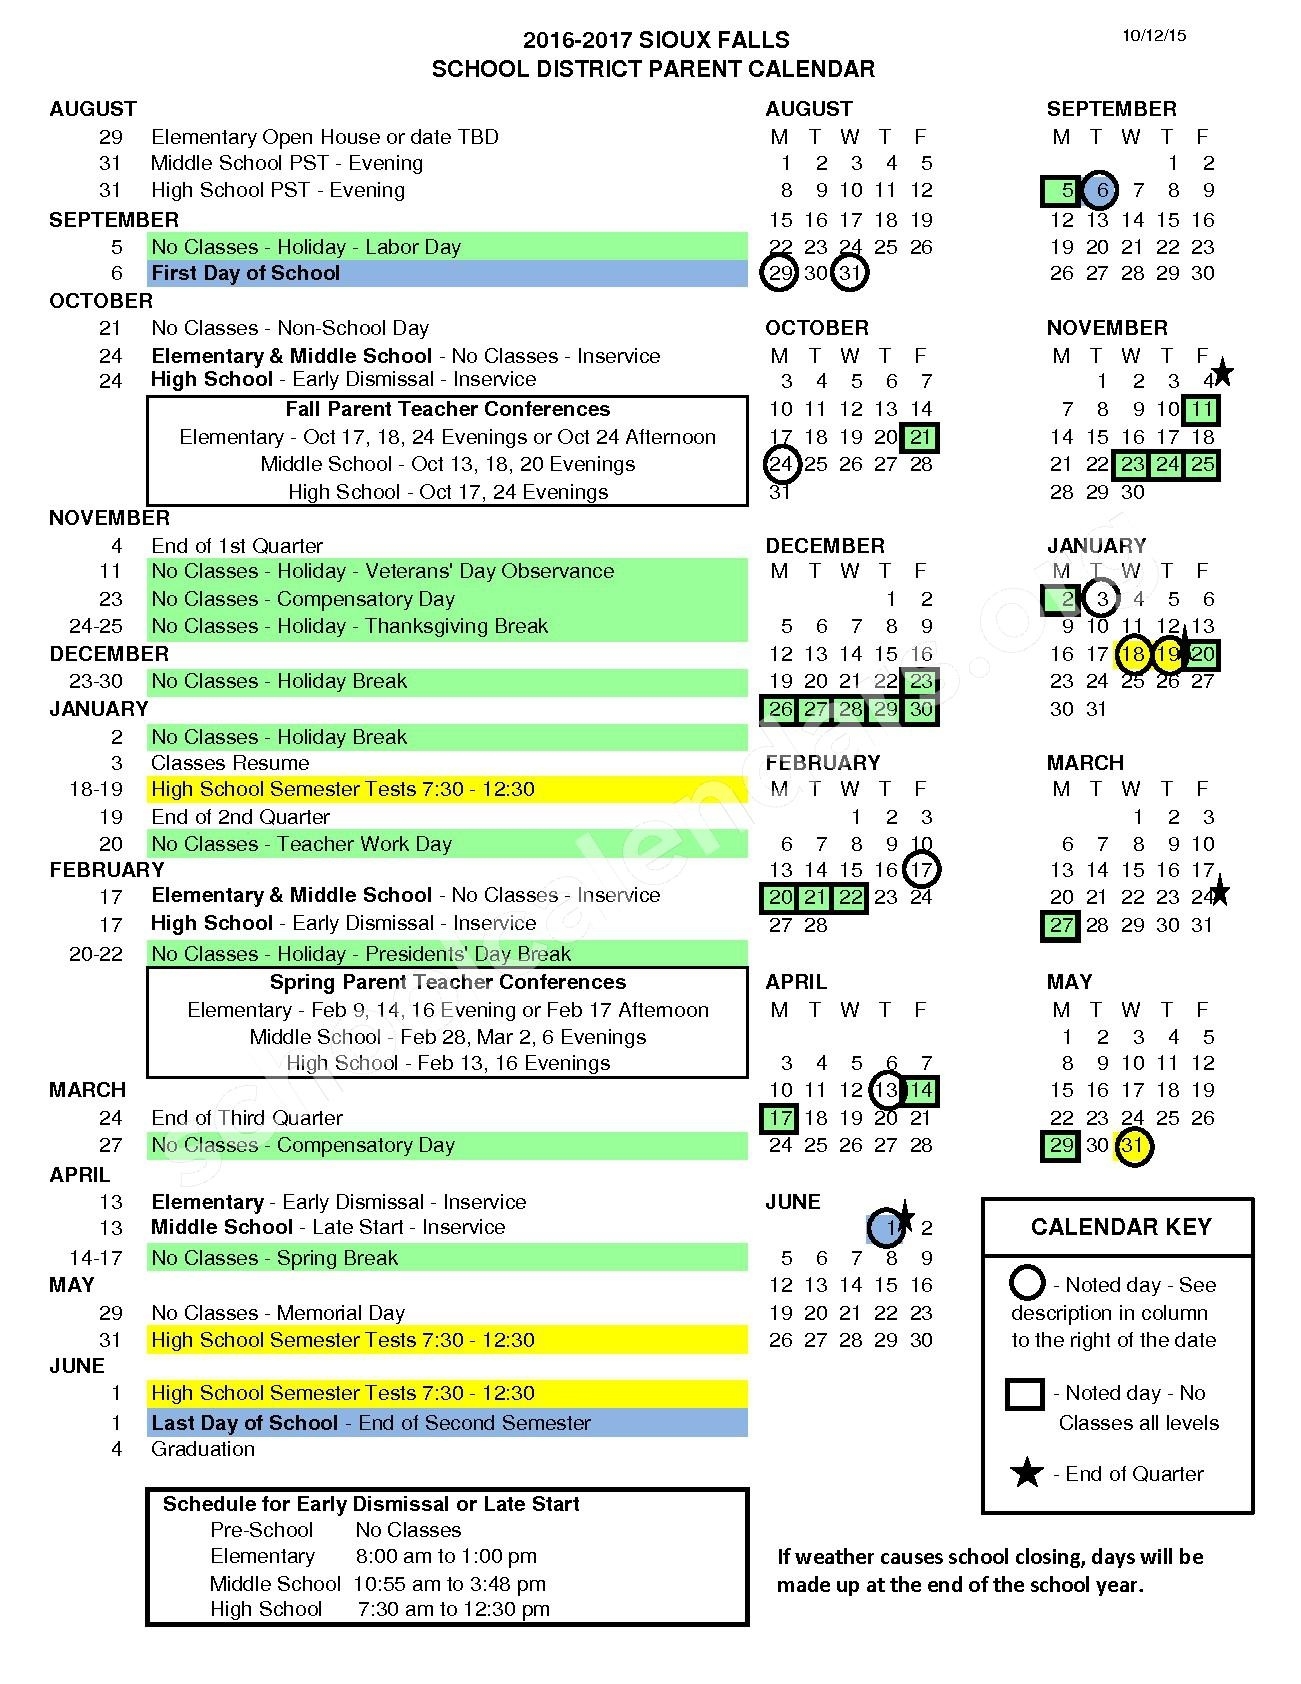 Sioux Falls School District Calendars – Sioux Falls, Sd School Calendar Sioux Falls